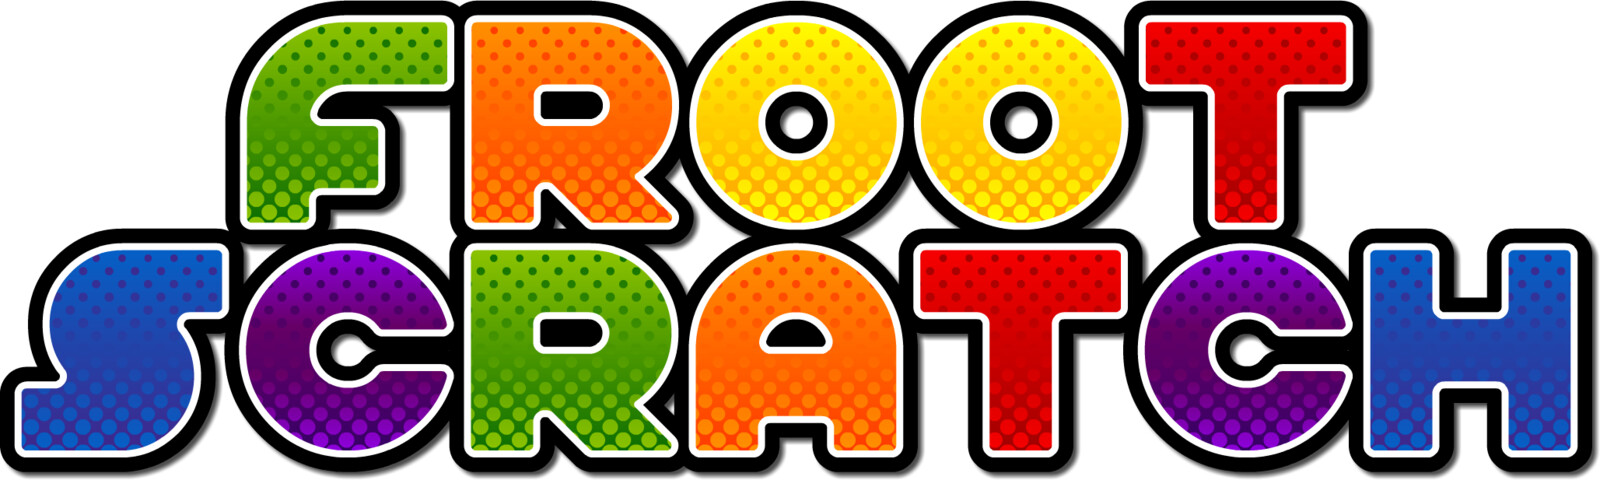 Froot Scratch Logo 2 Line